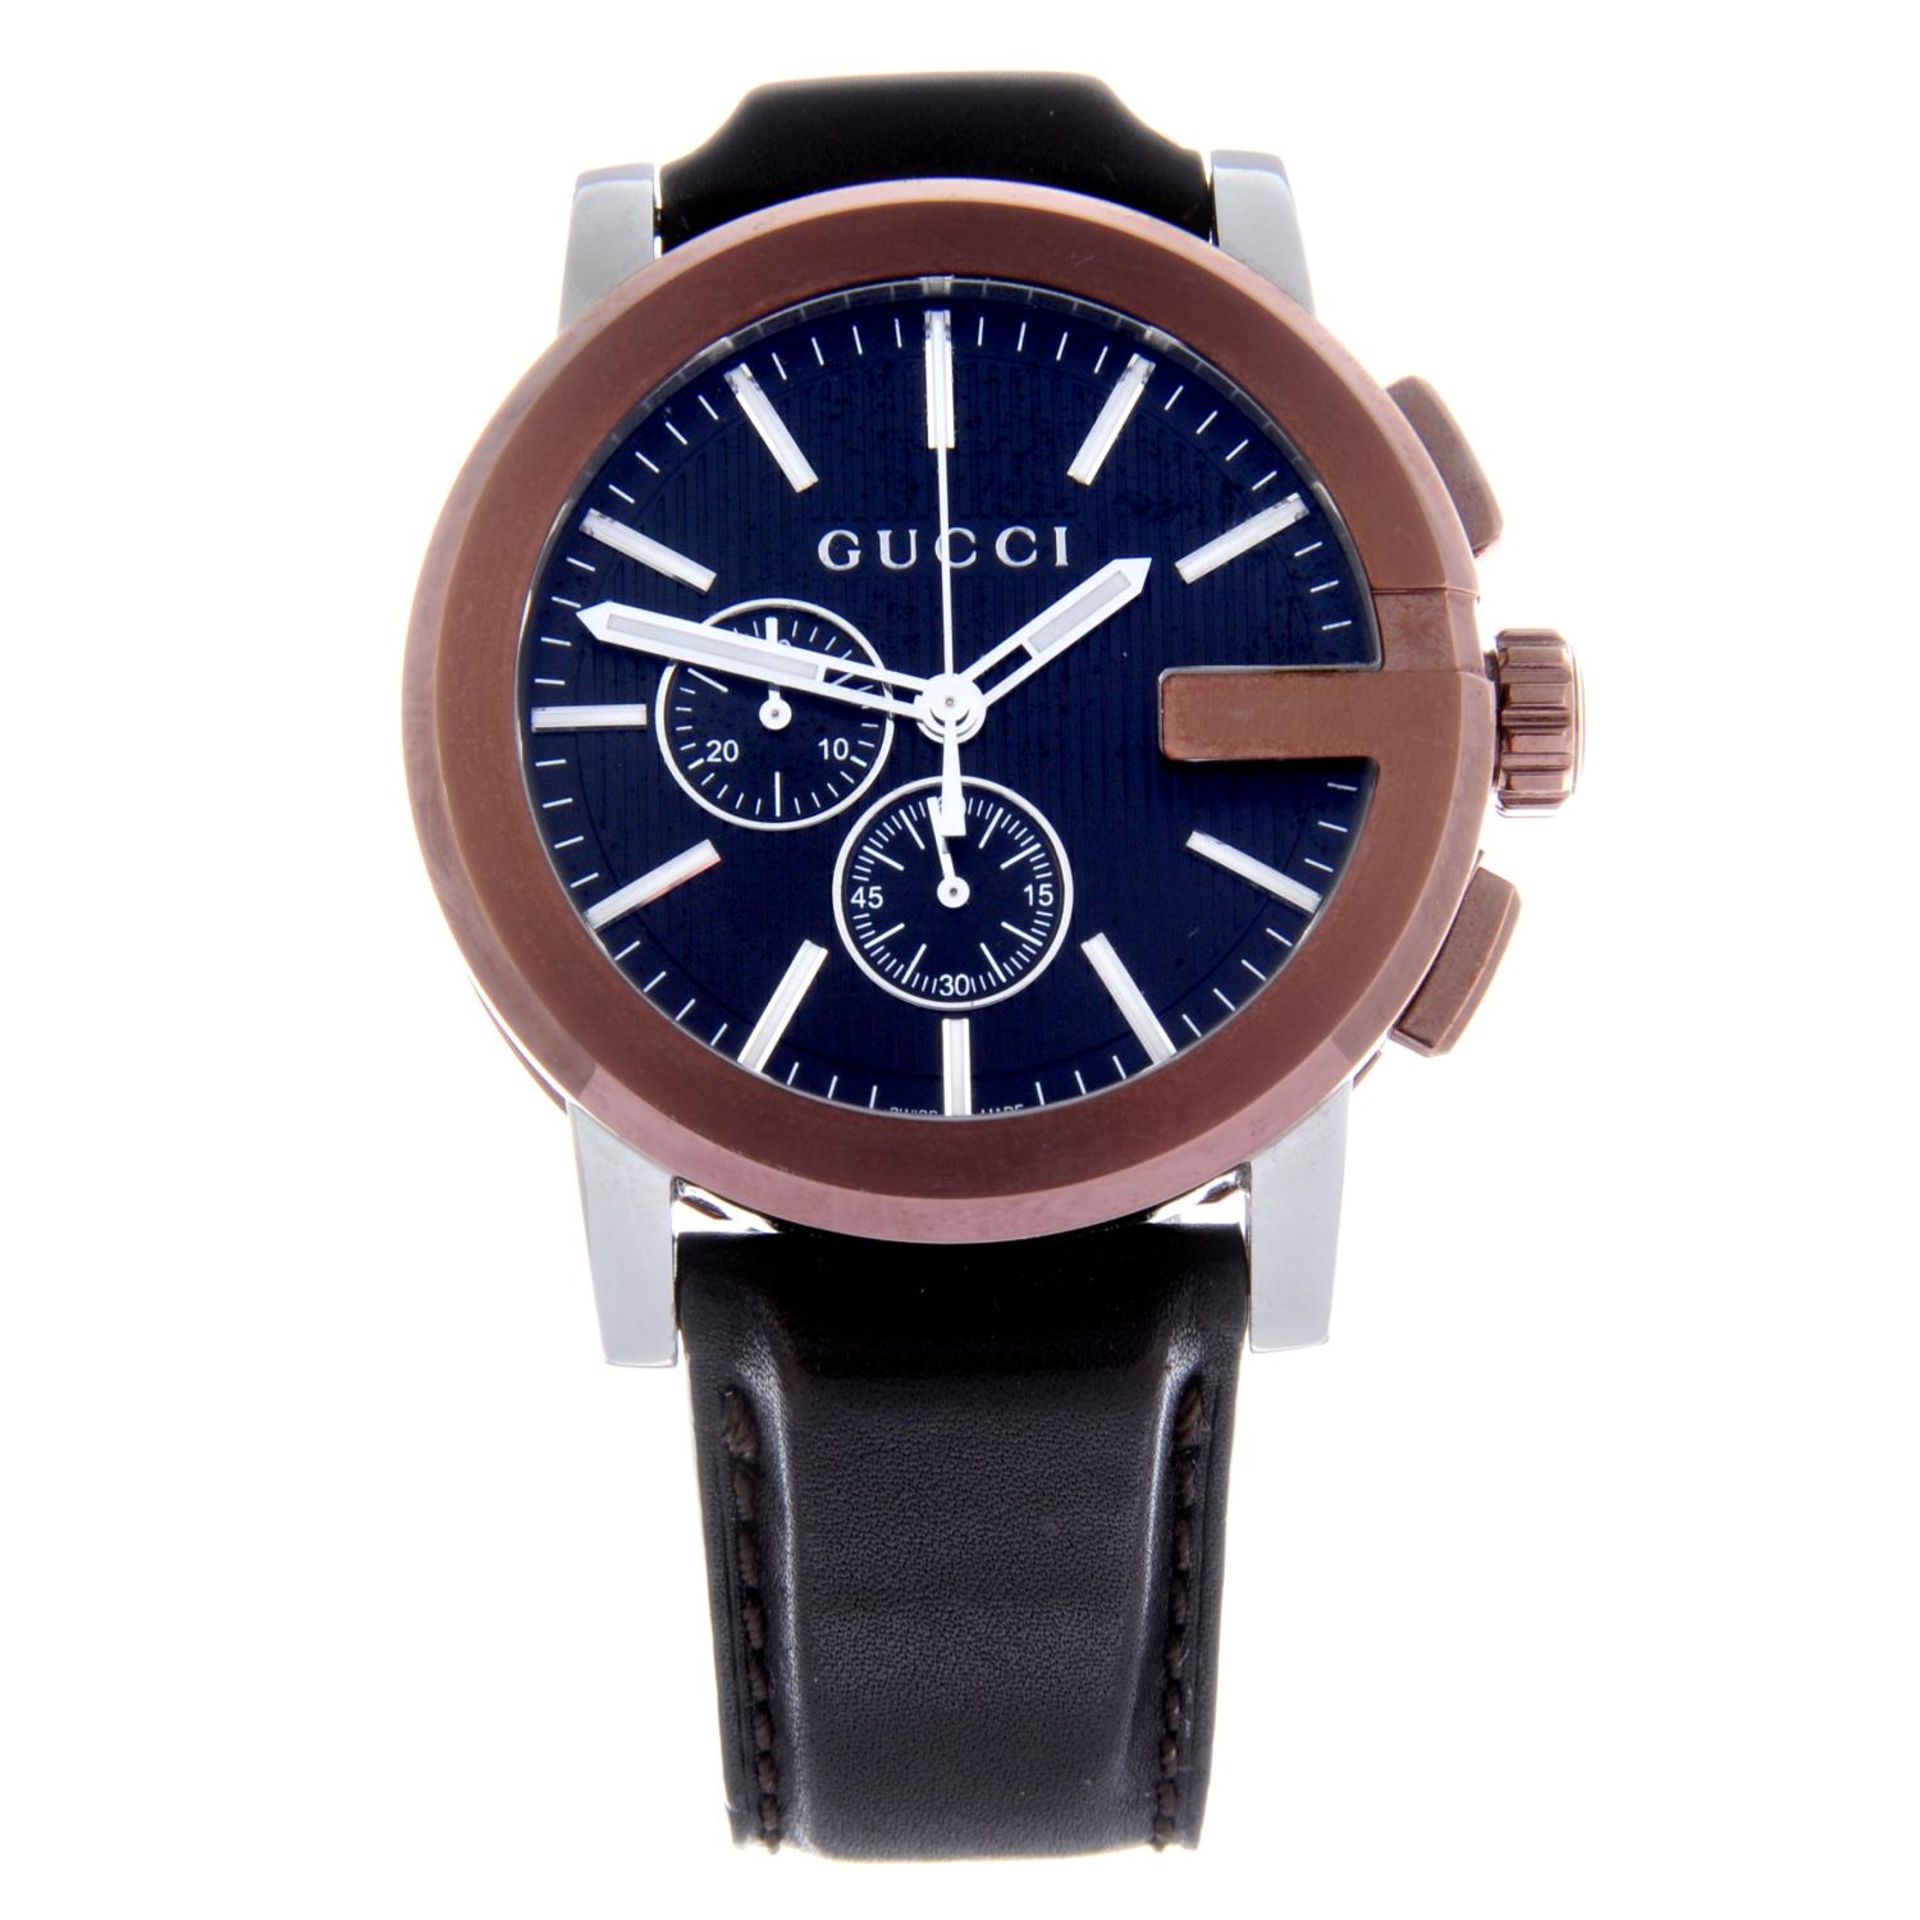 GUCCI - a gentleman's G-Chrono chronograph wrist watch.